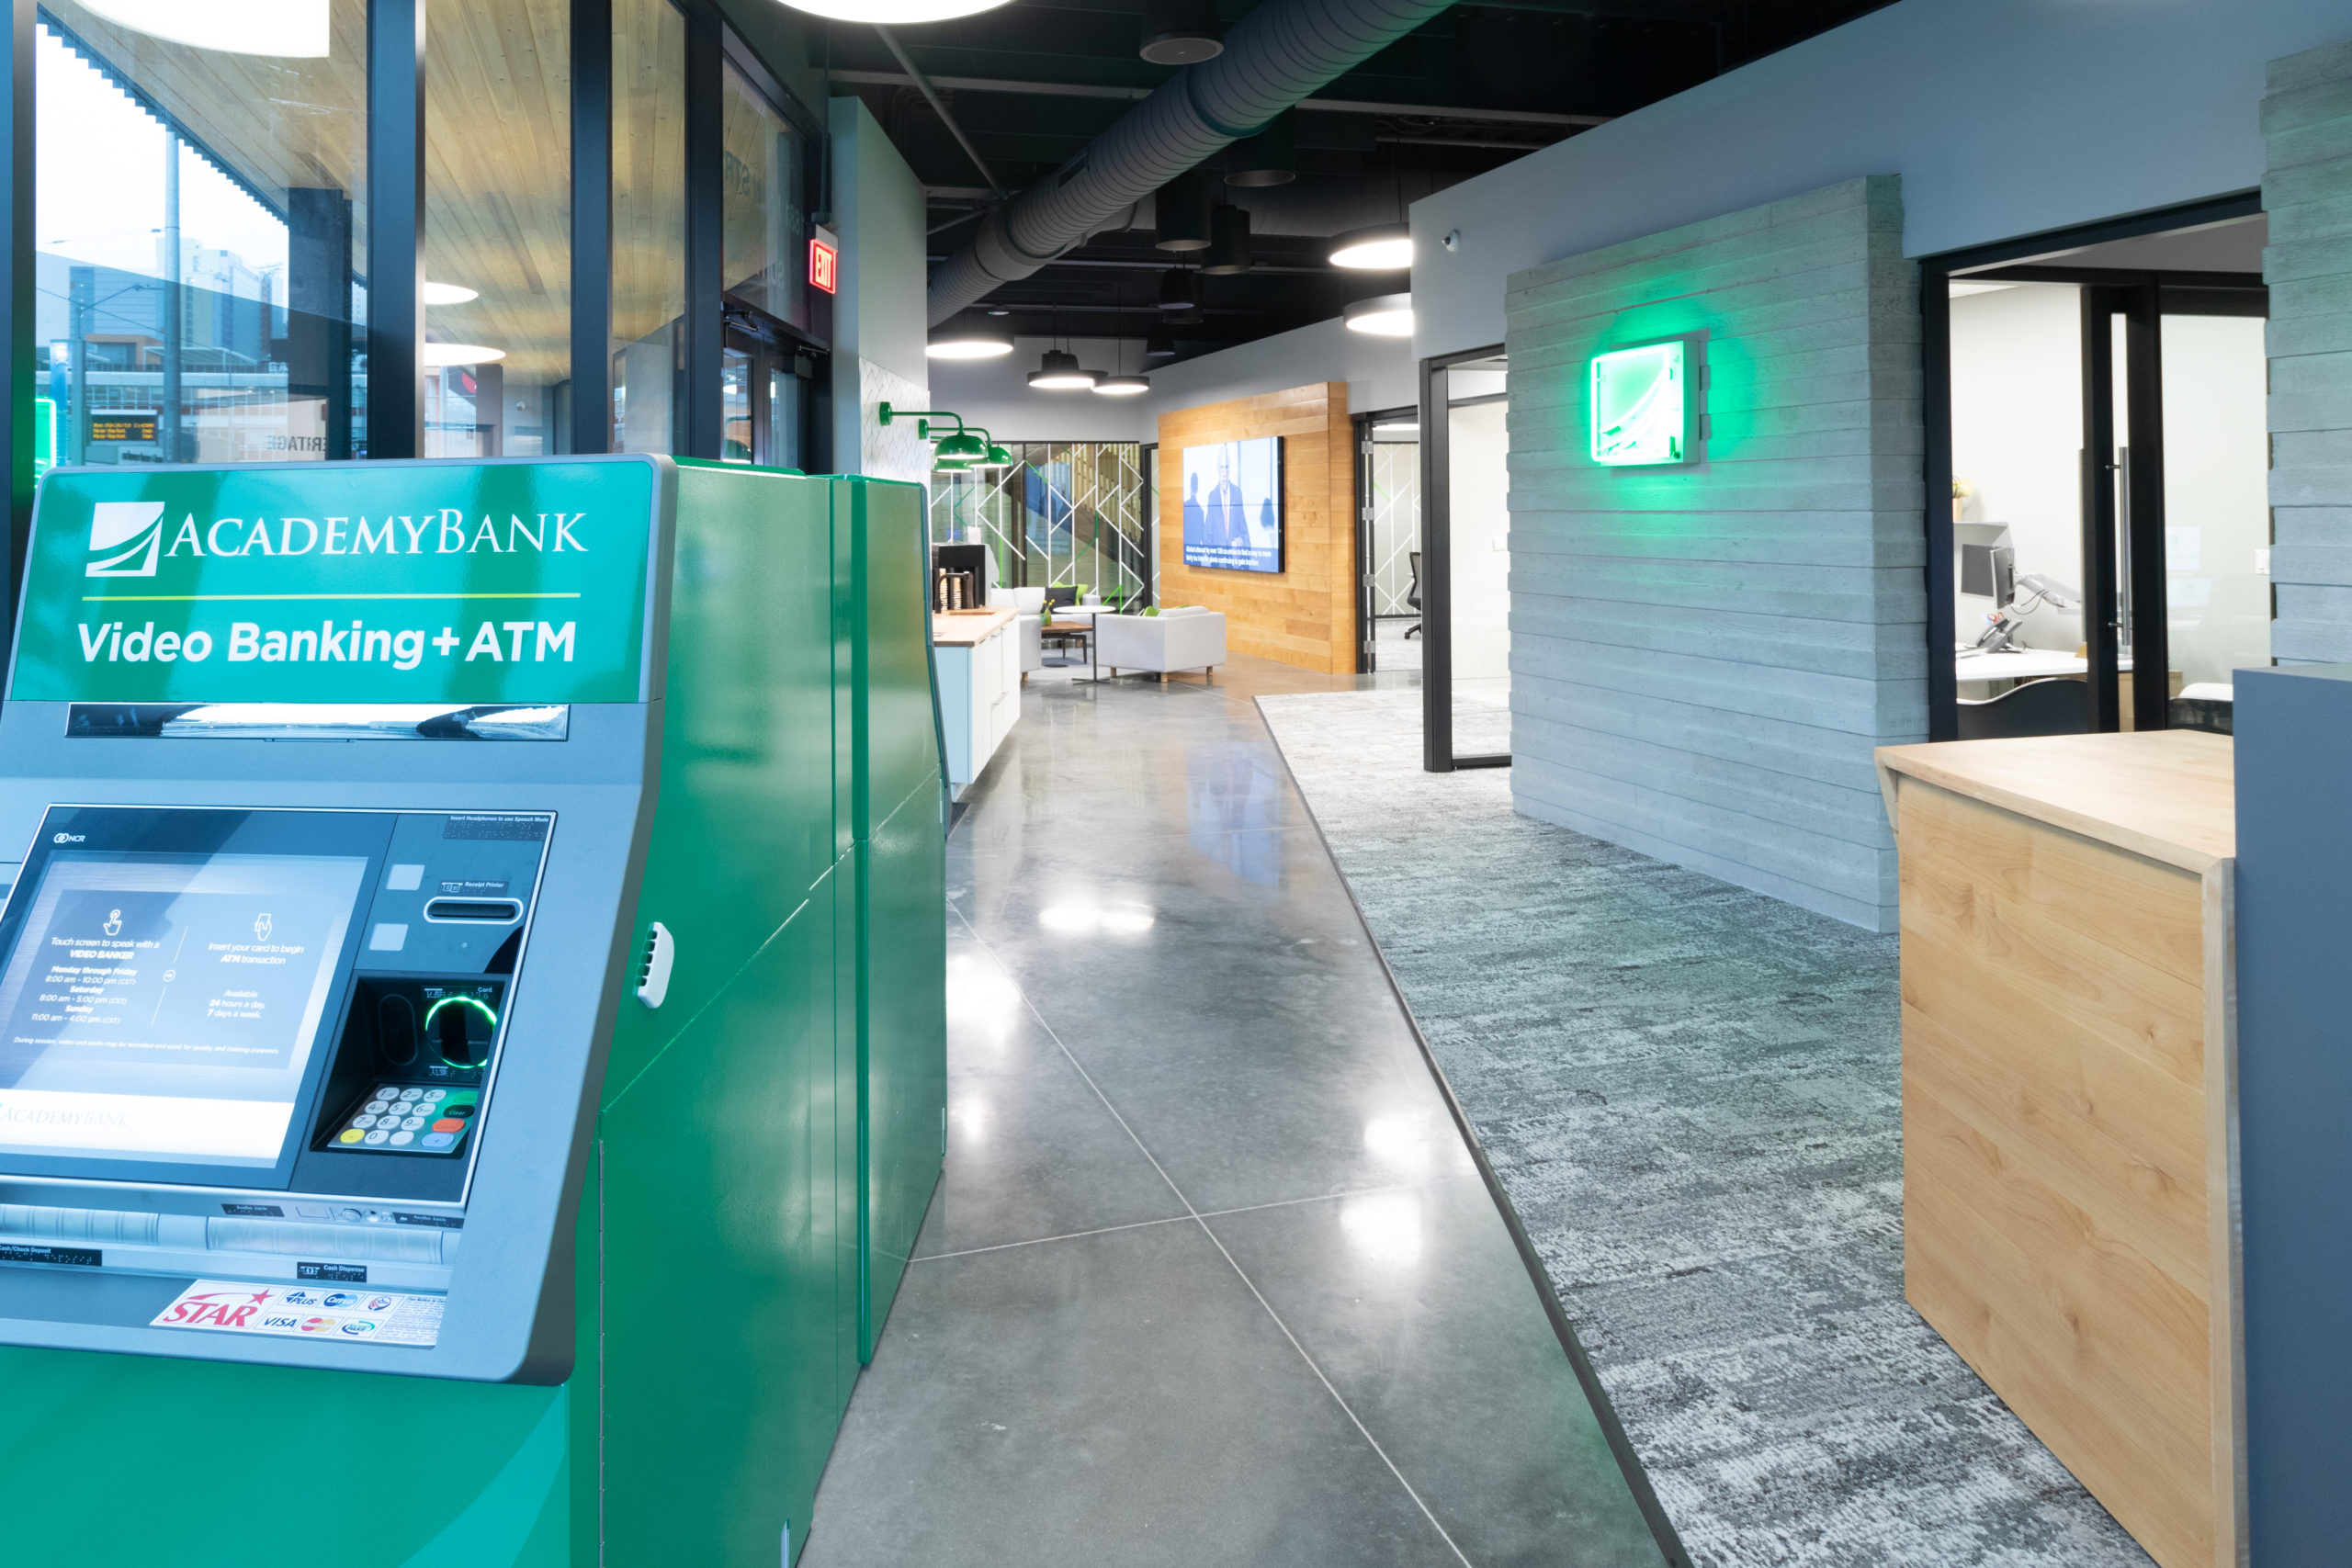 Academy Bank's video banking kiosks